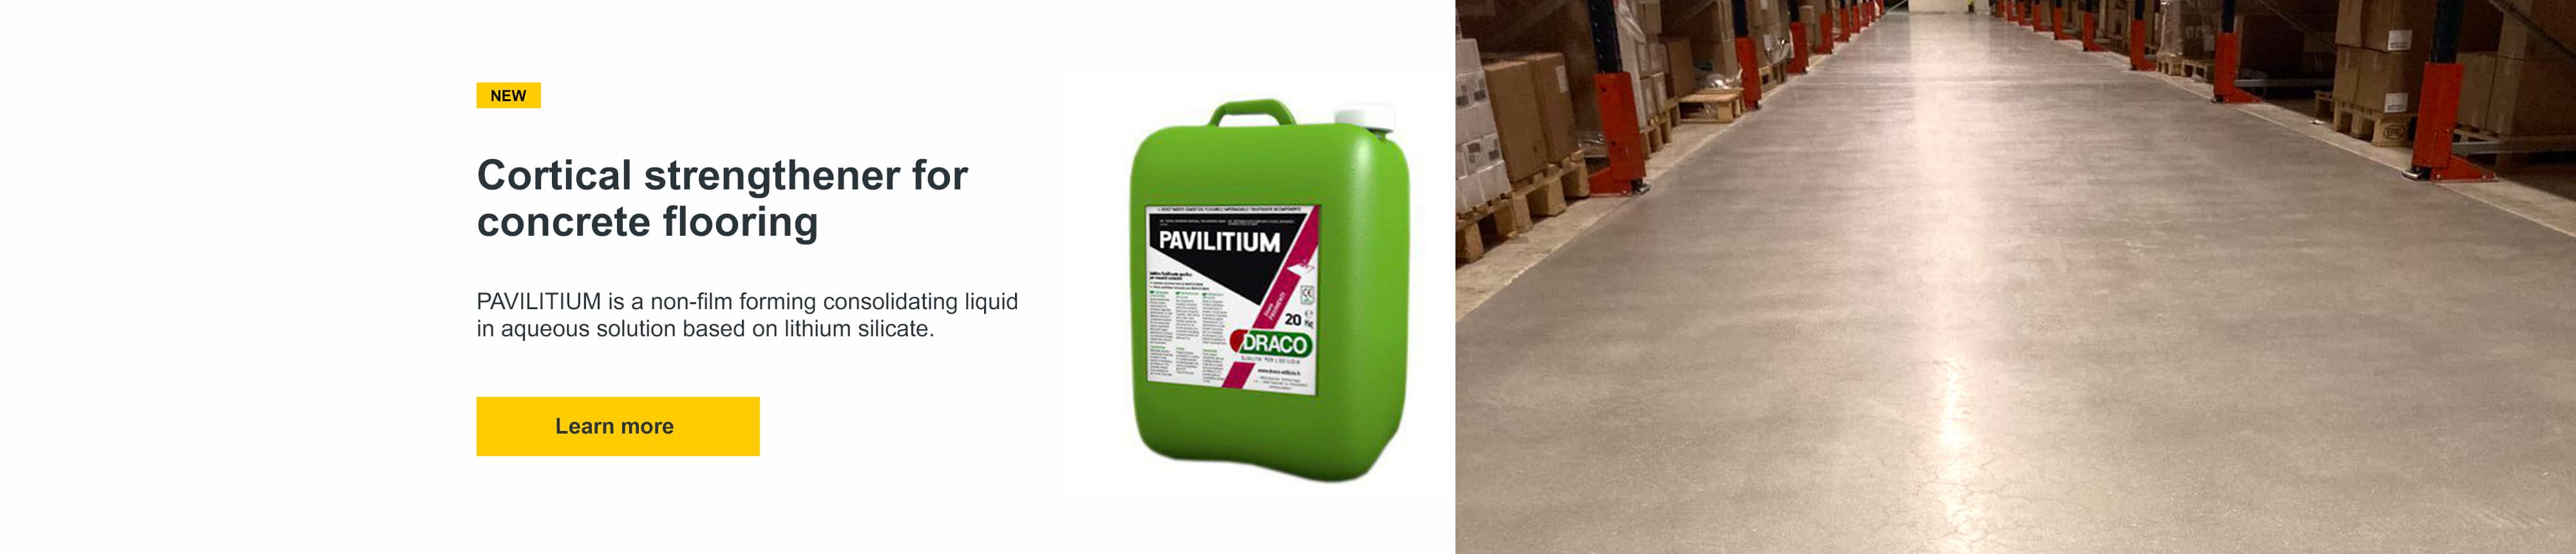 Cortical strengthener for concrete flooring PAVILITIUM